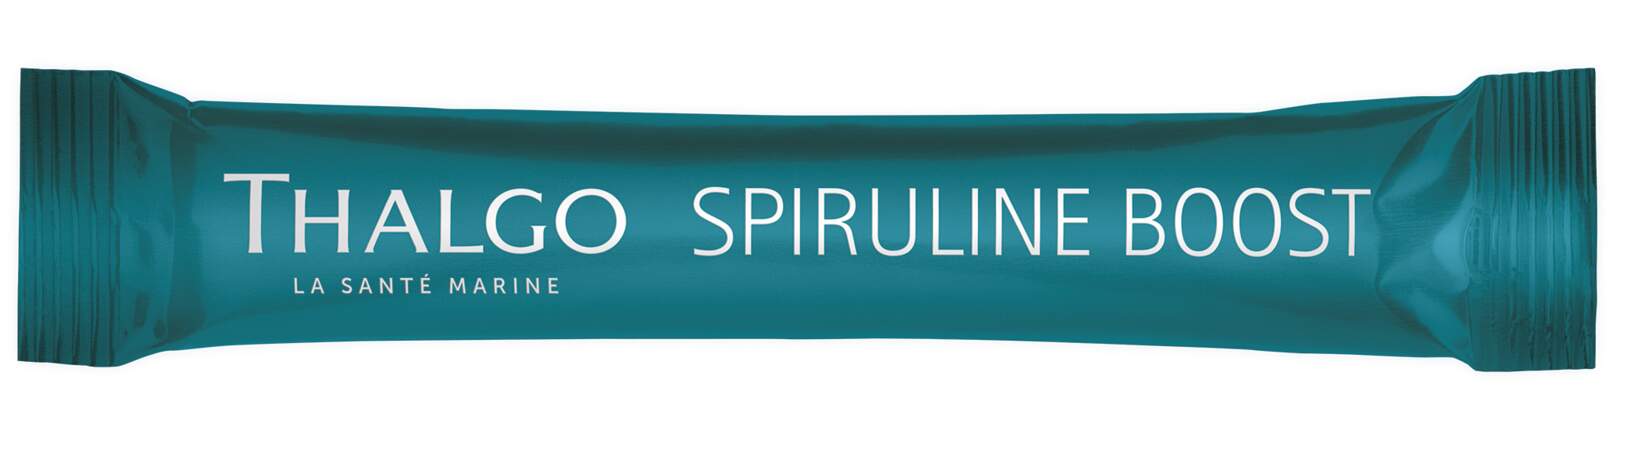 Cure Spiruline Boost Shooter Détox & Energie, Thalgo, 19,90 €